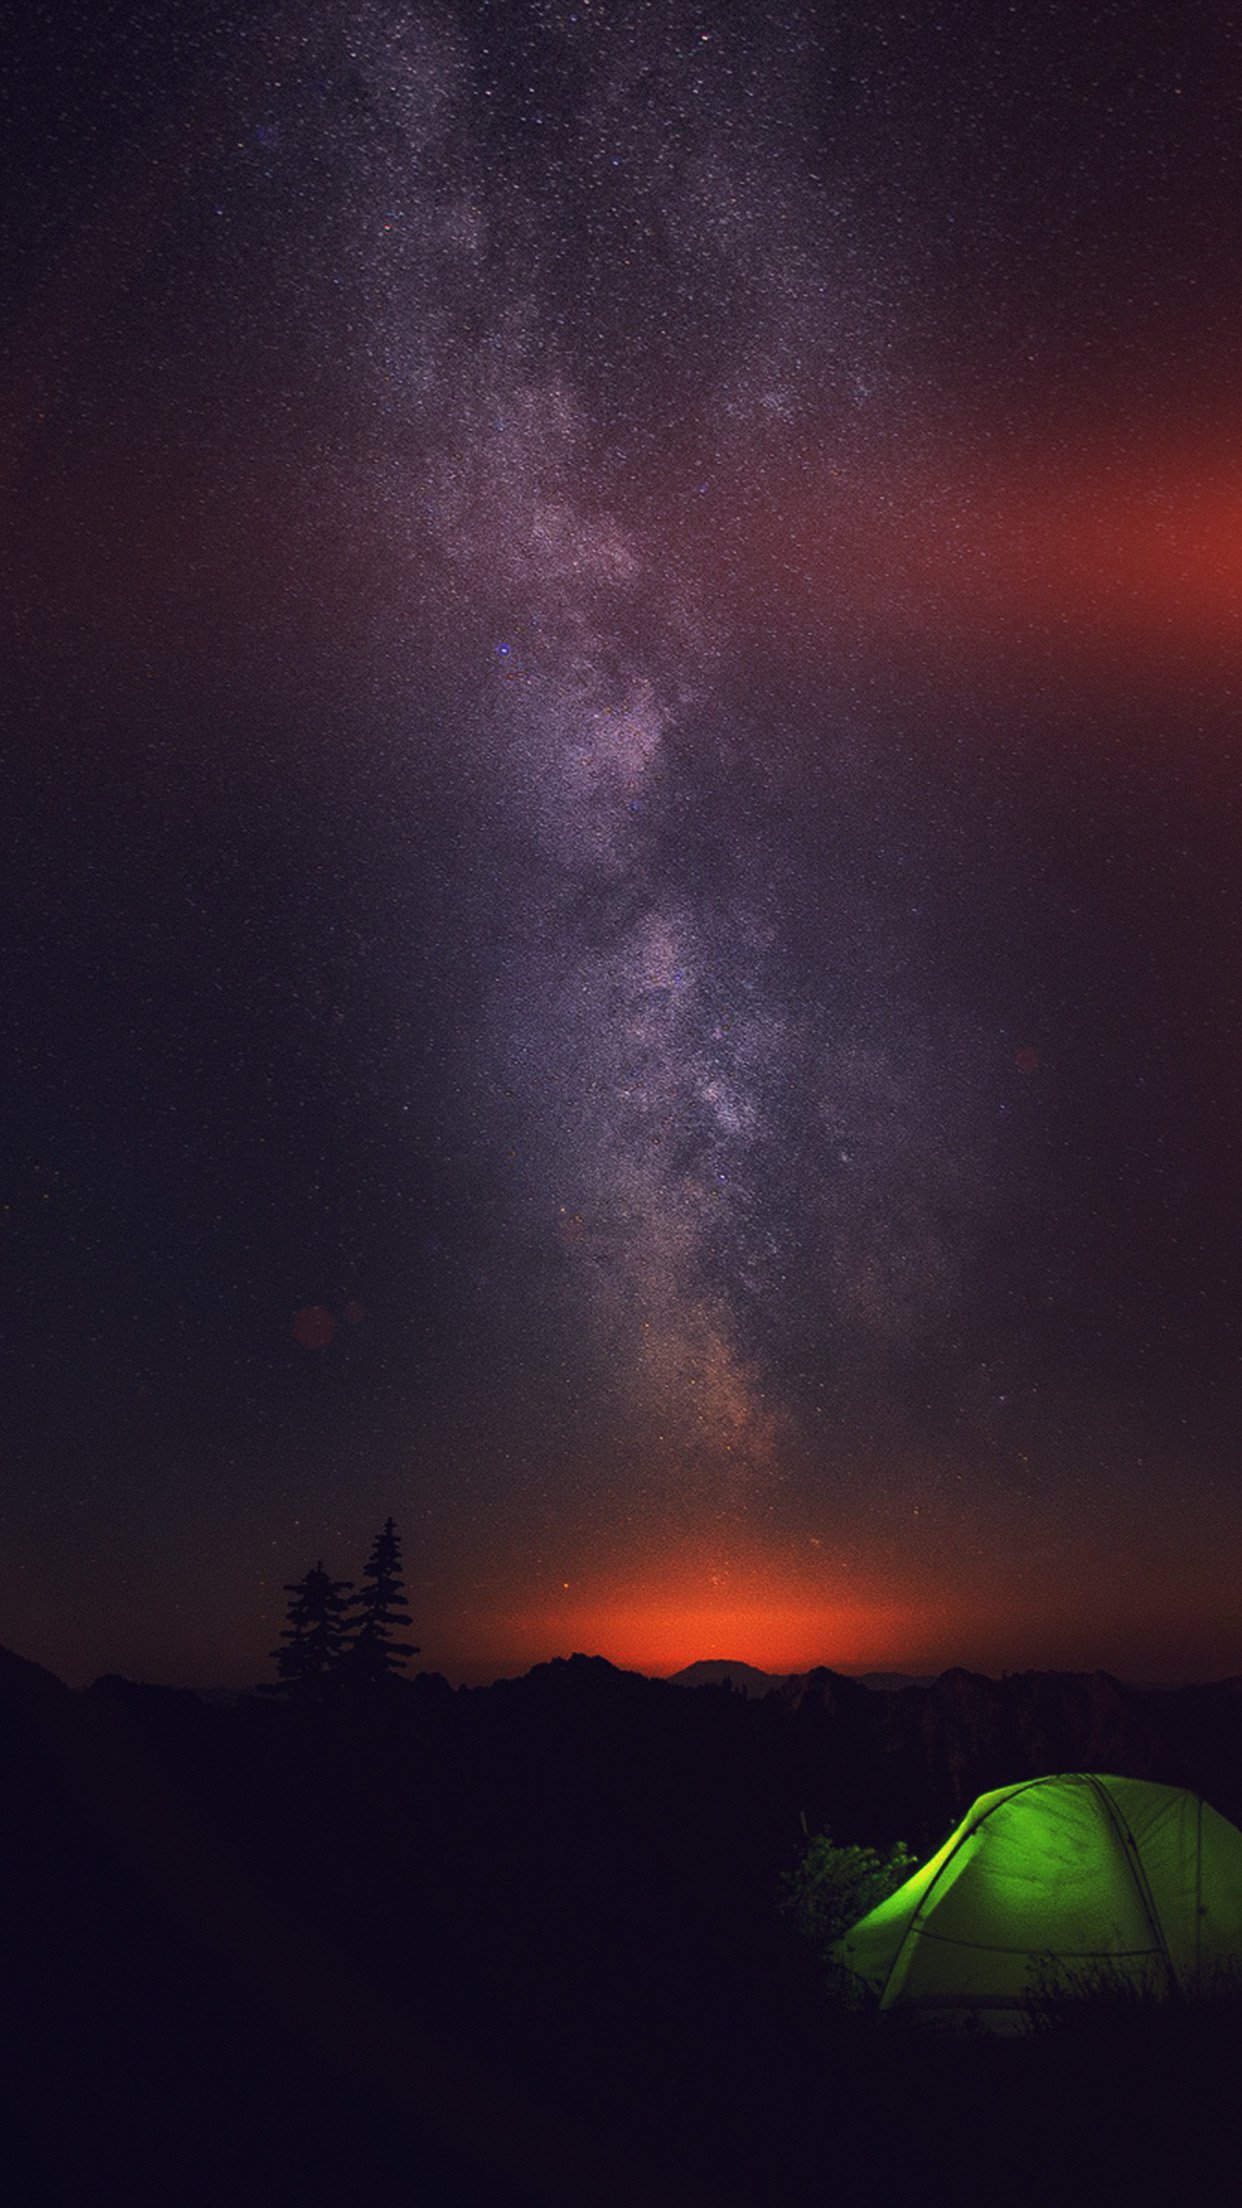 Camping Night Star Galaxy Milky Sky Dark Space Android wallpaper